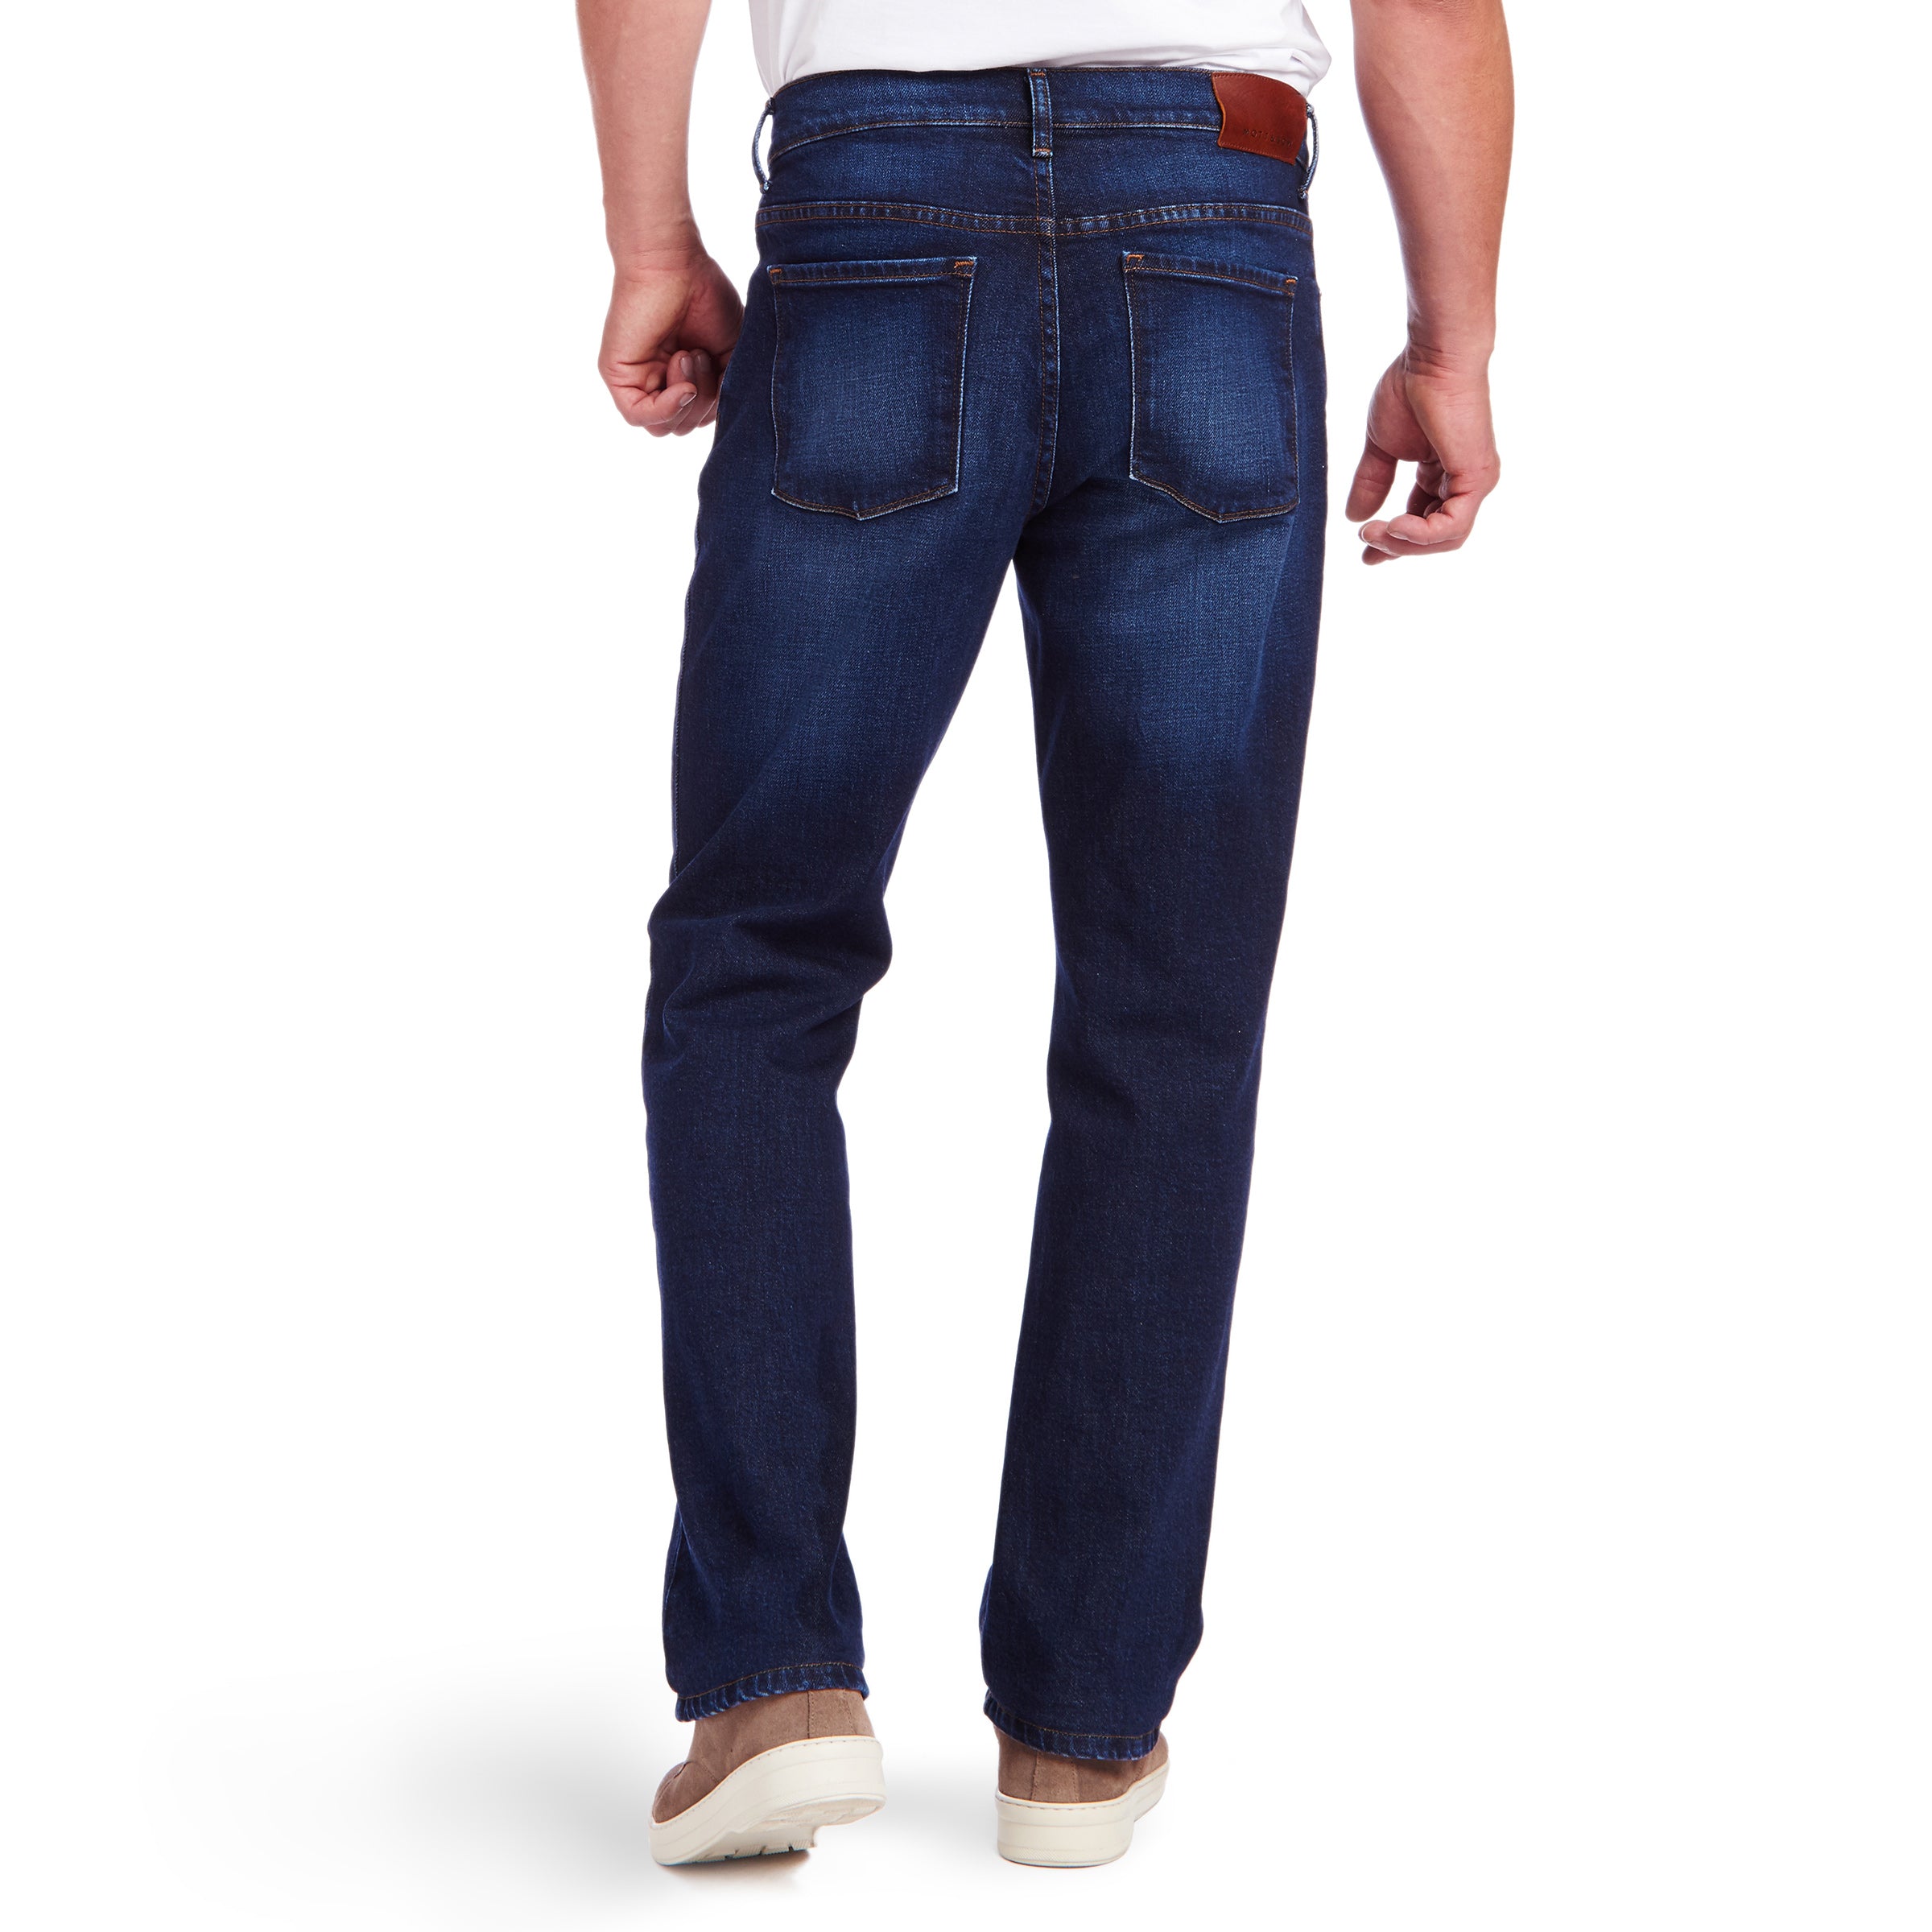 Men wearing Azul oscuro/medio Straight Hubert Jeans